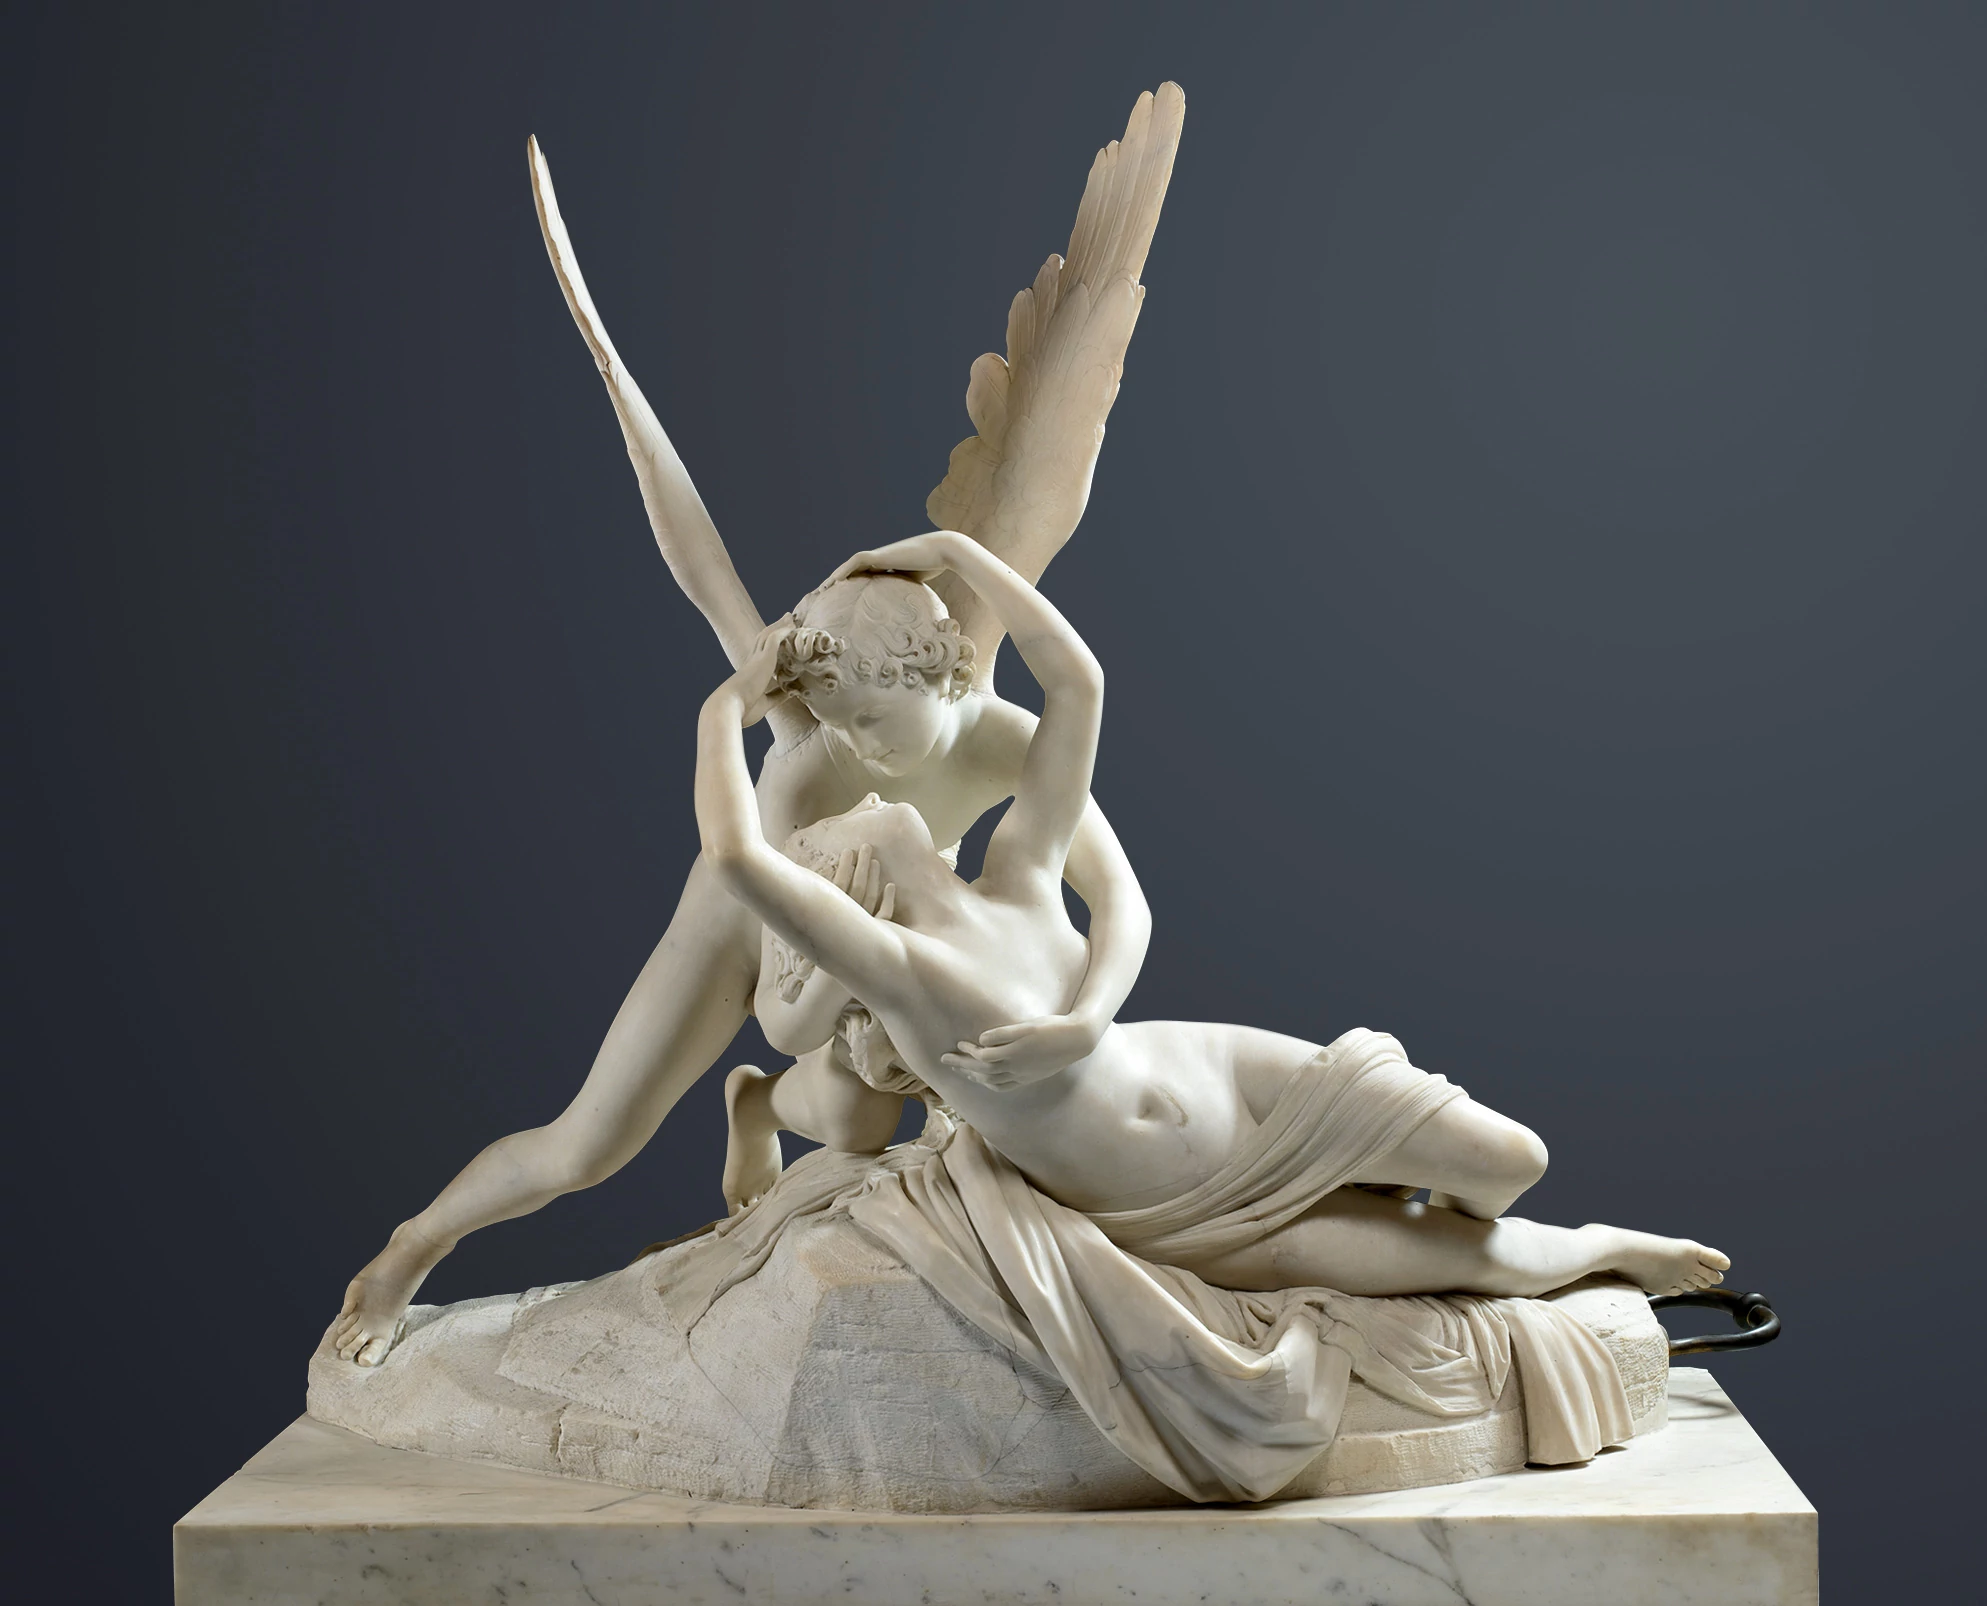 Psyche Revived by Cupid's Kiss, Antonio Canova